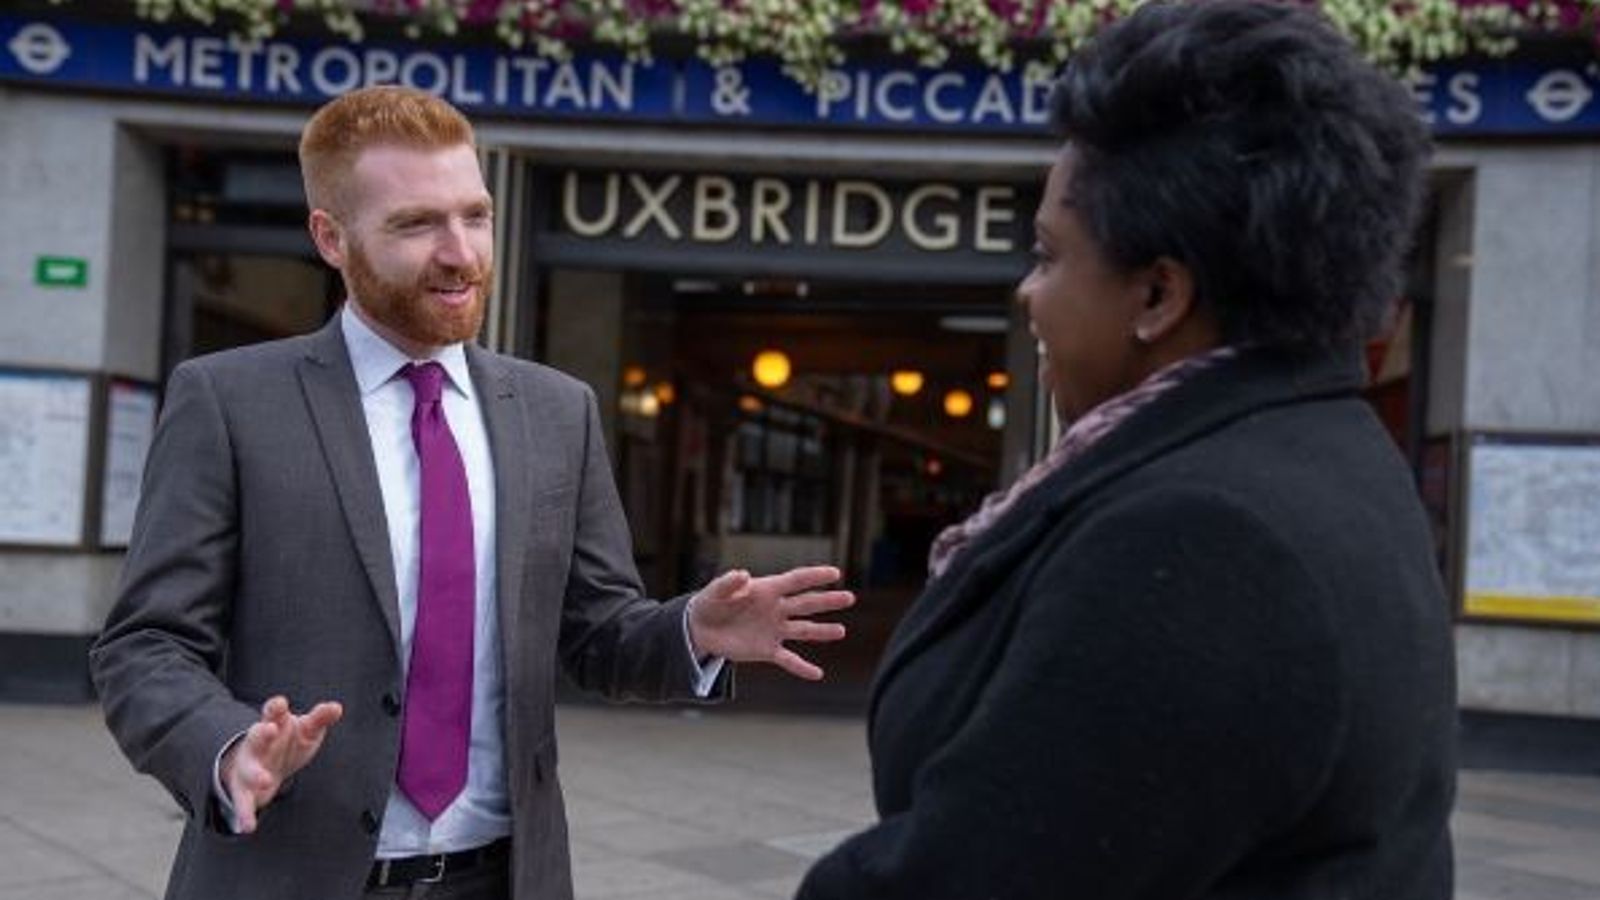 Labour split as Uxbridge by-election candidate speaks out against London mayor's ULEZ expansion